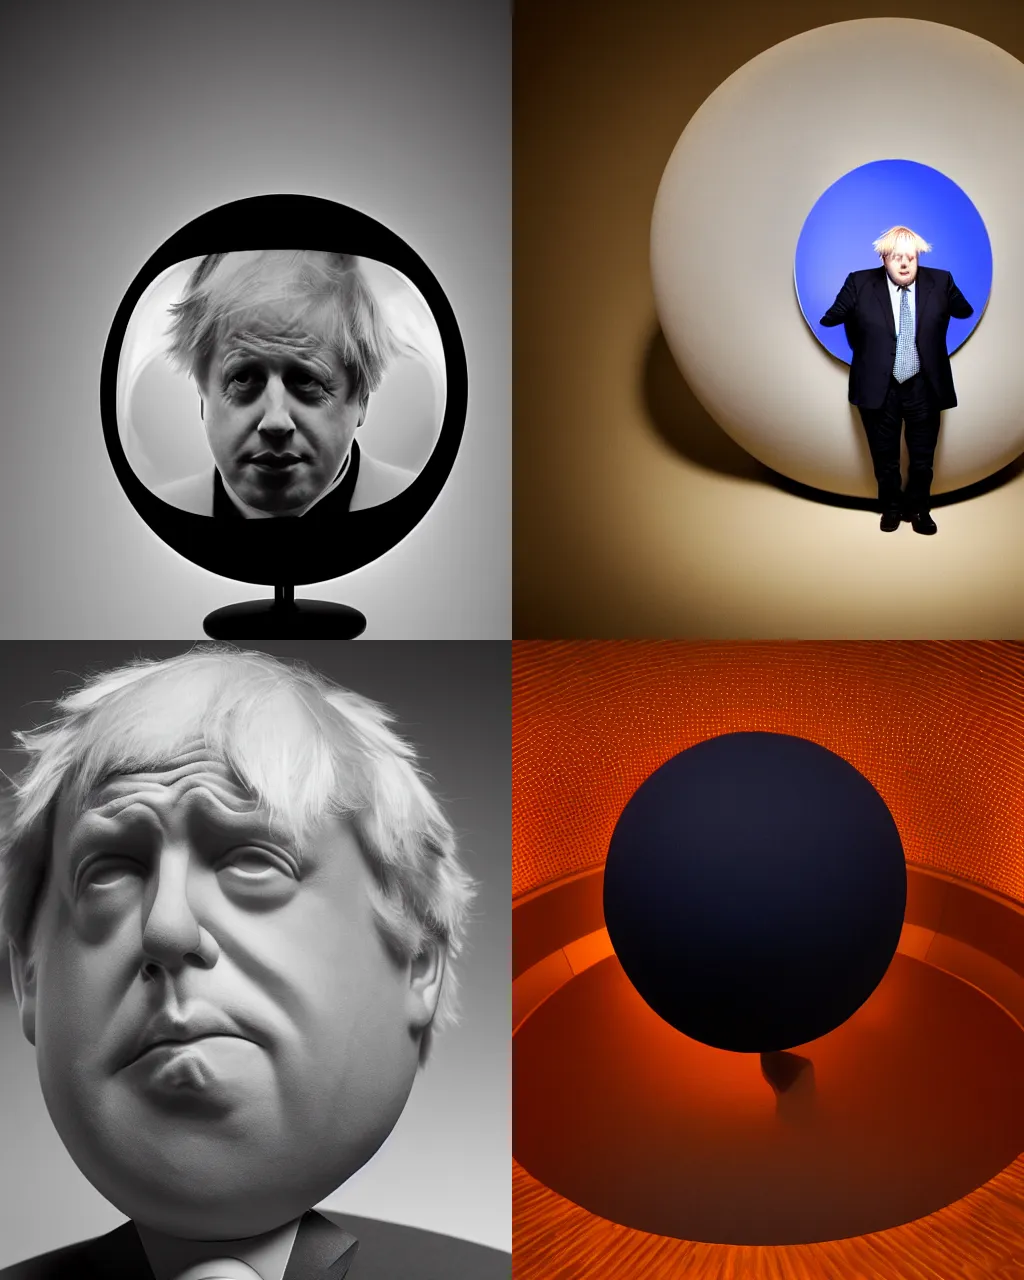 Prompt: spherical boris johnson, boris johnson as a sphere, studio lighting, high quality photograph